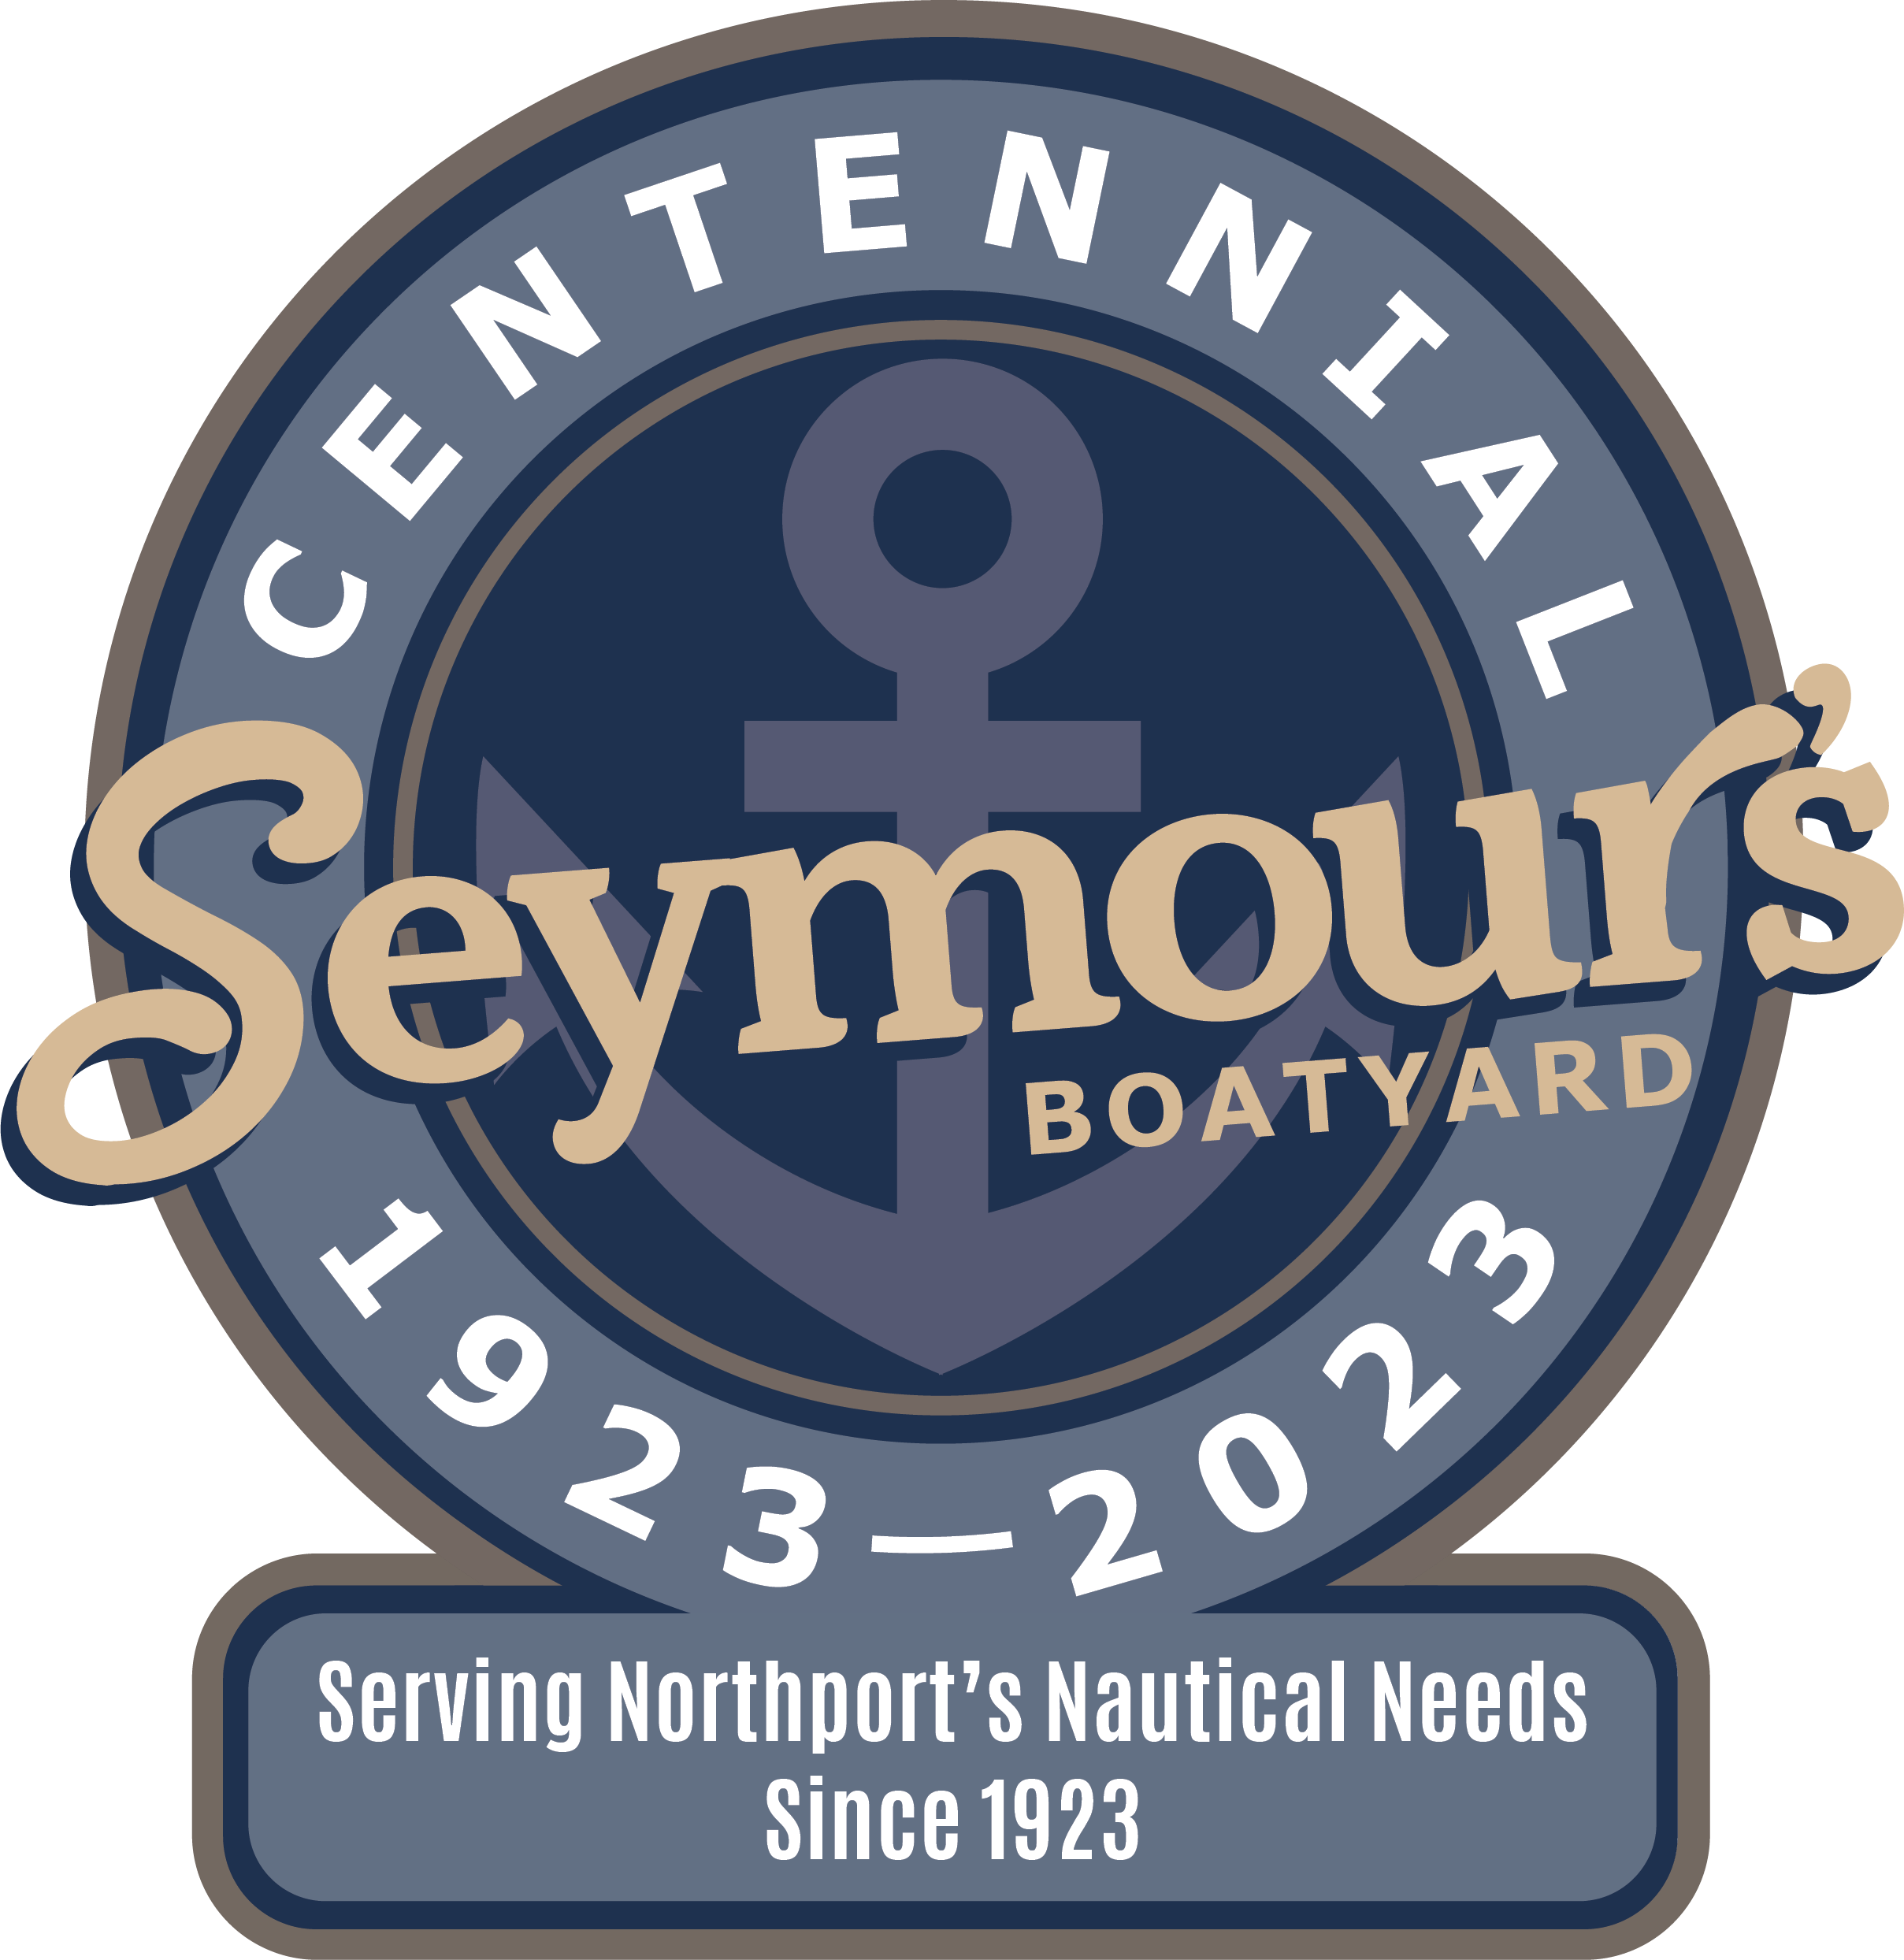 Seymour's Boatyard